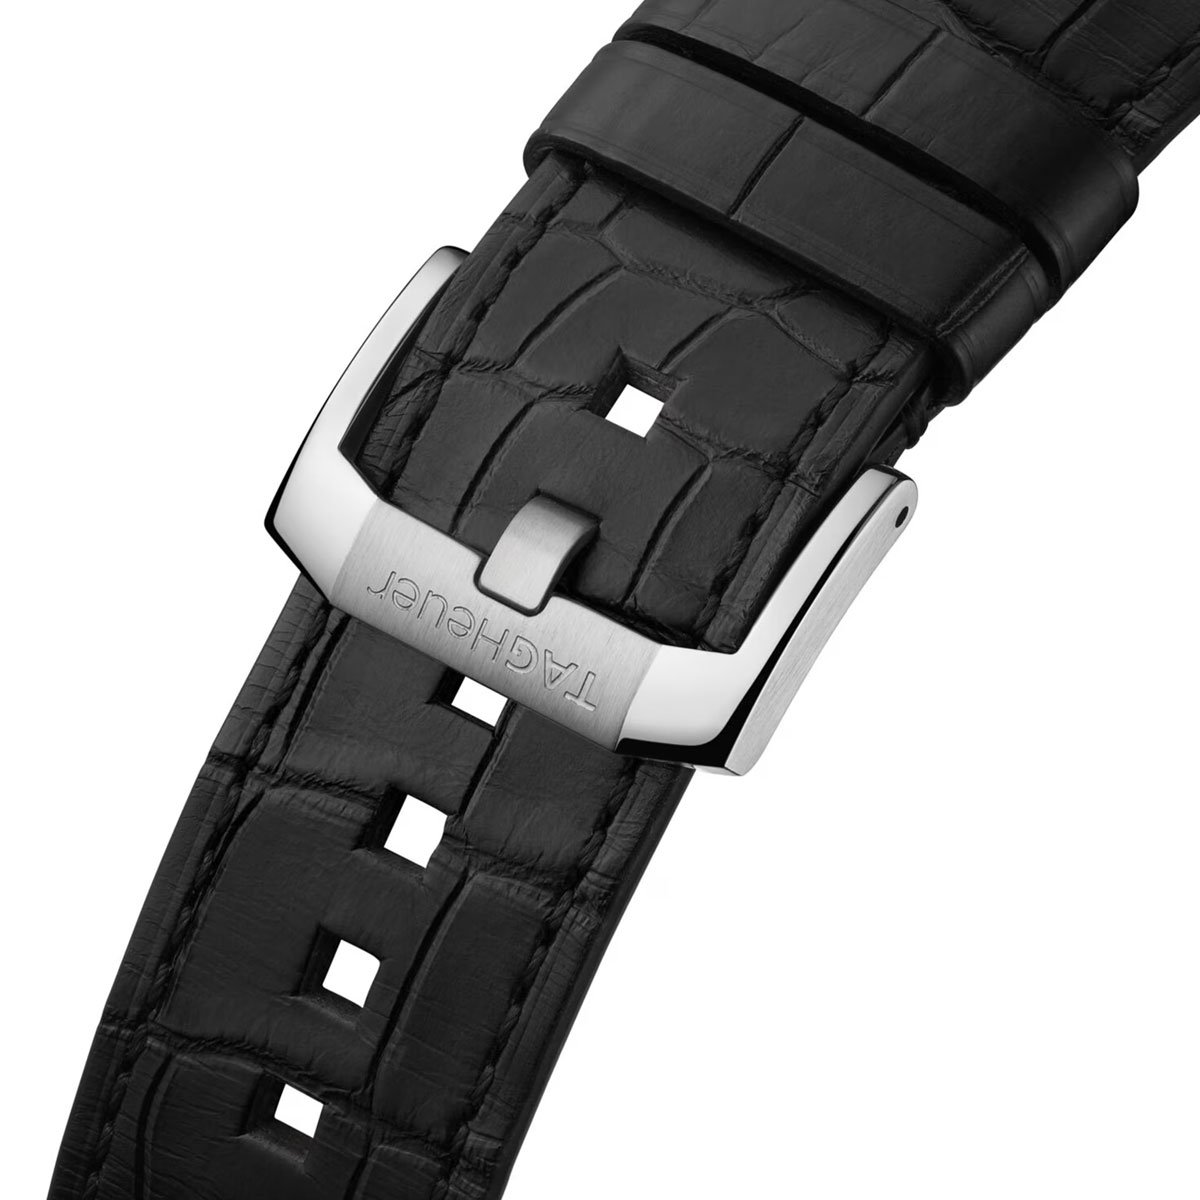 Autavia Flyback Chronometer 42mm Watch